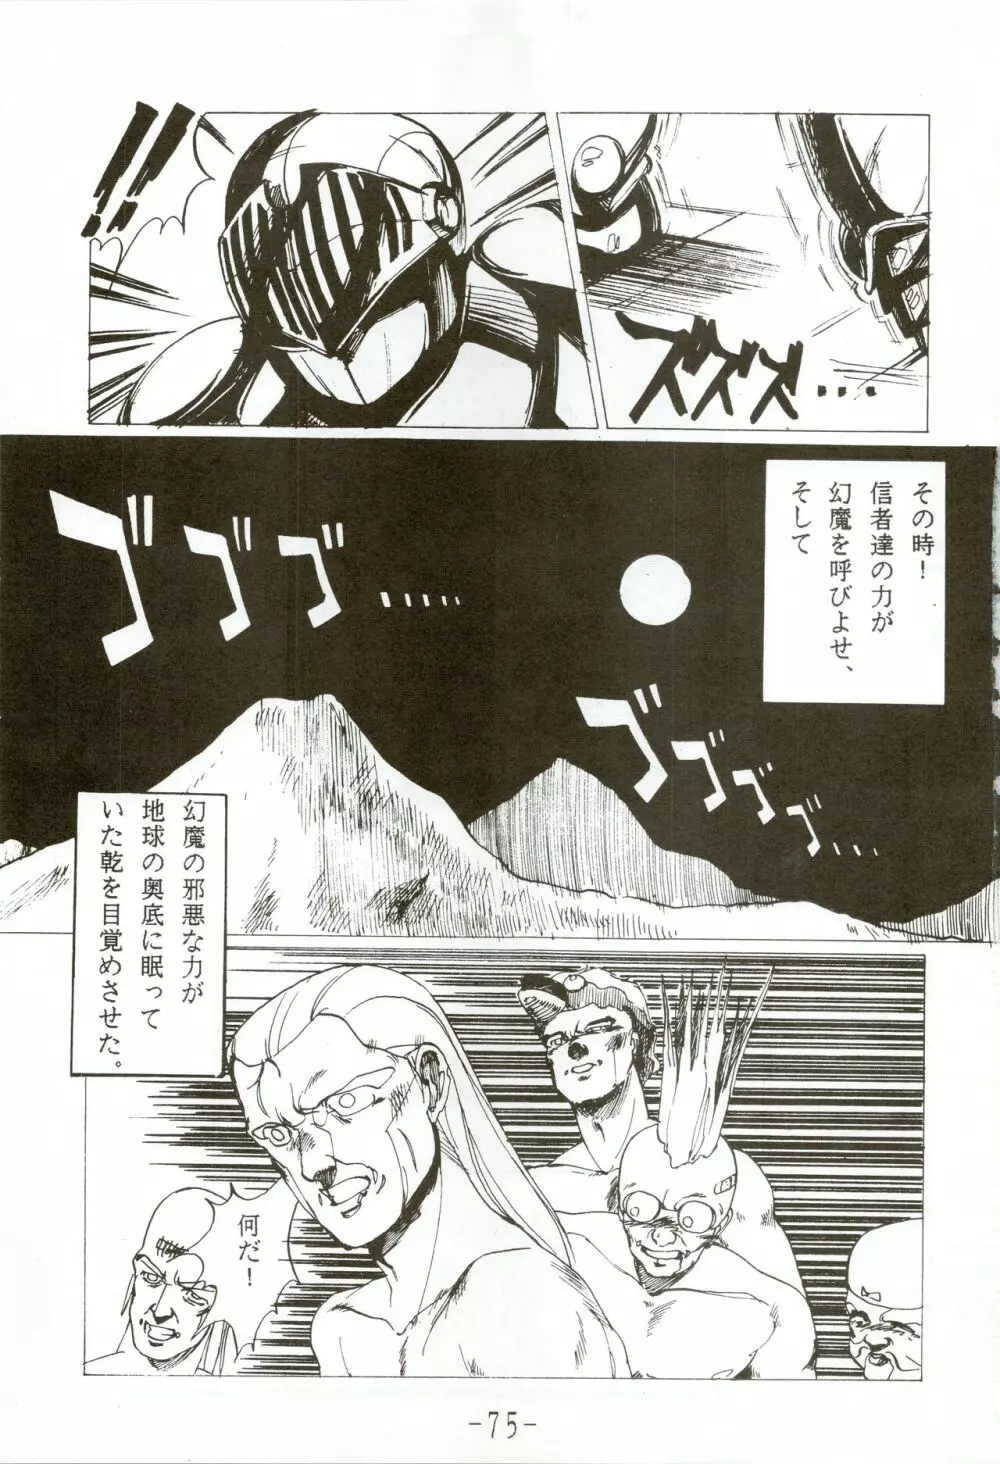 甲冑伝説 - page75